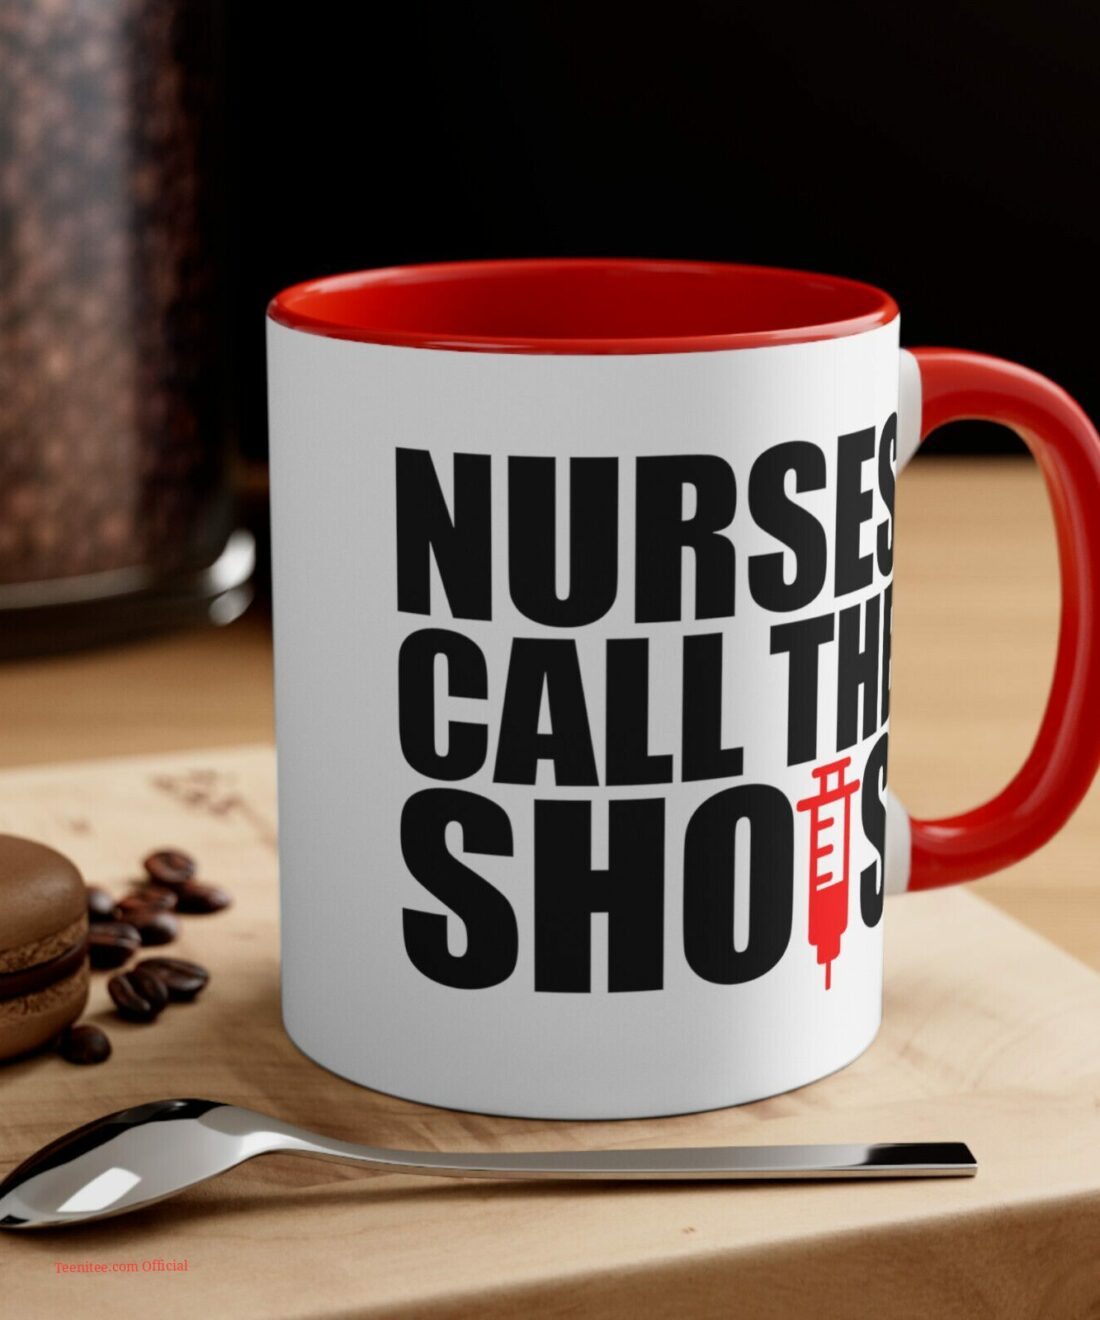 Nurse call the shot| cute gift mug for mom or daughter